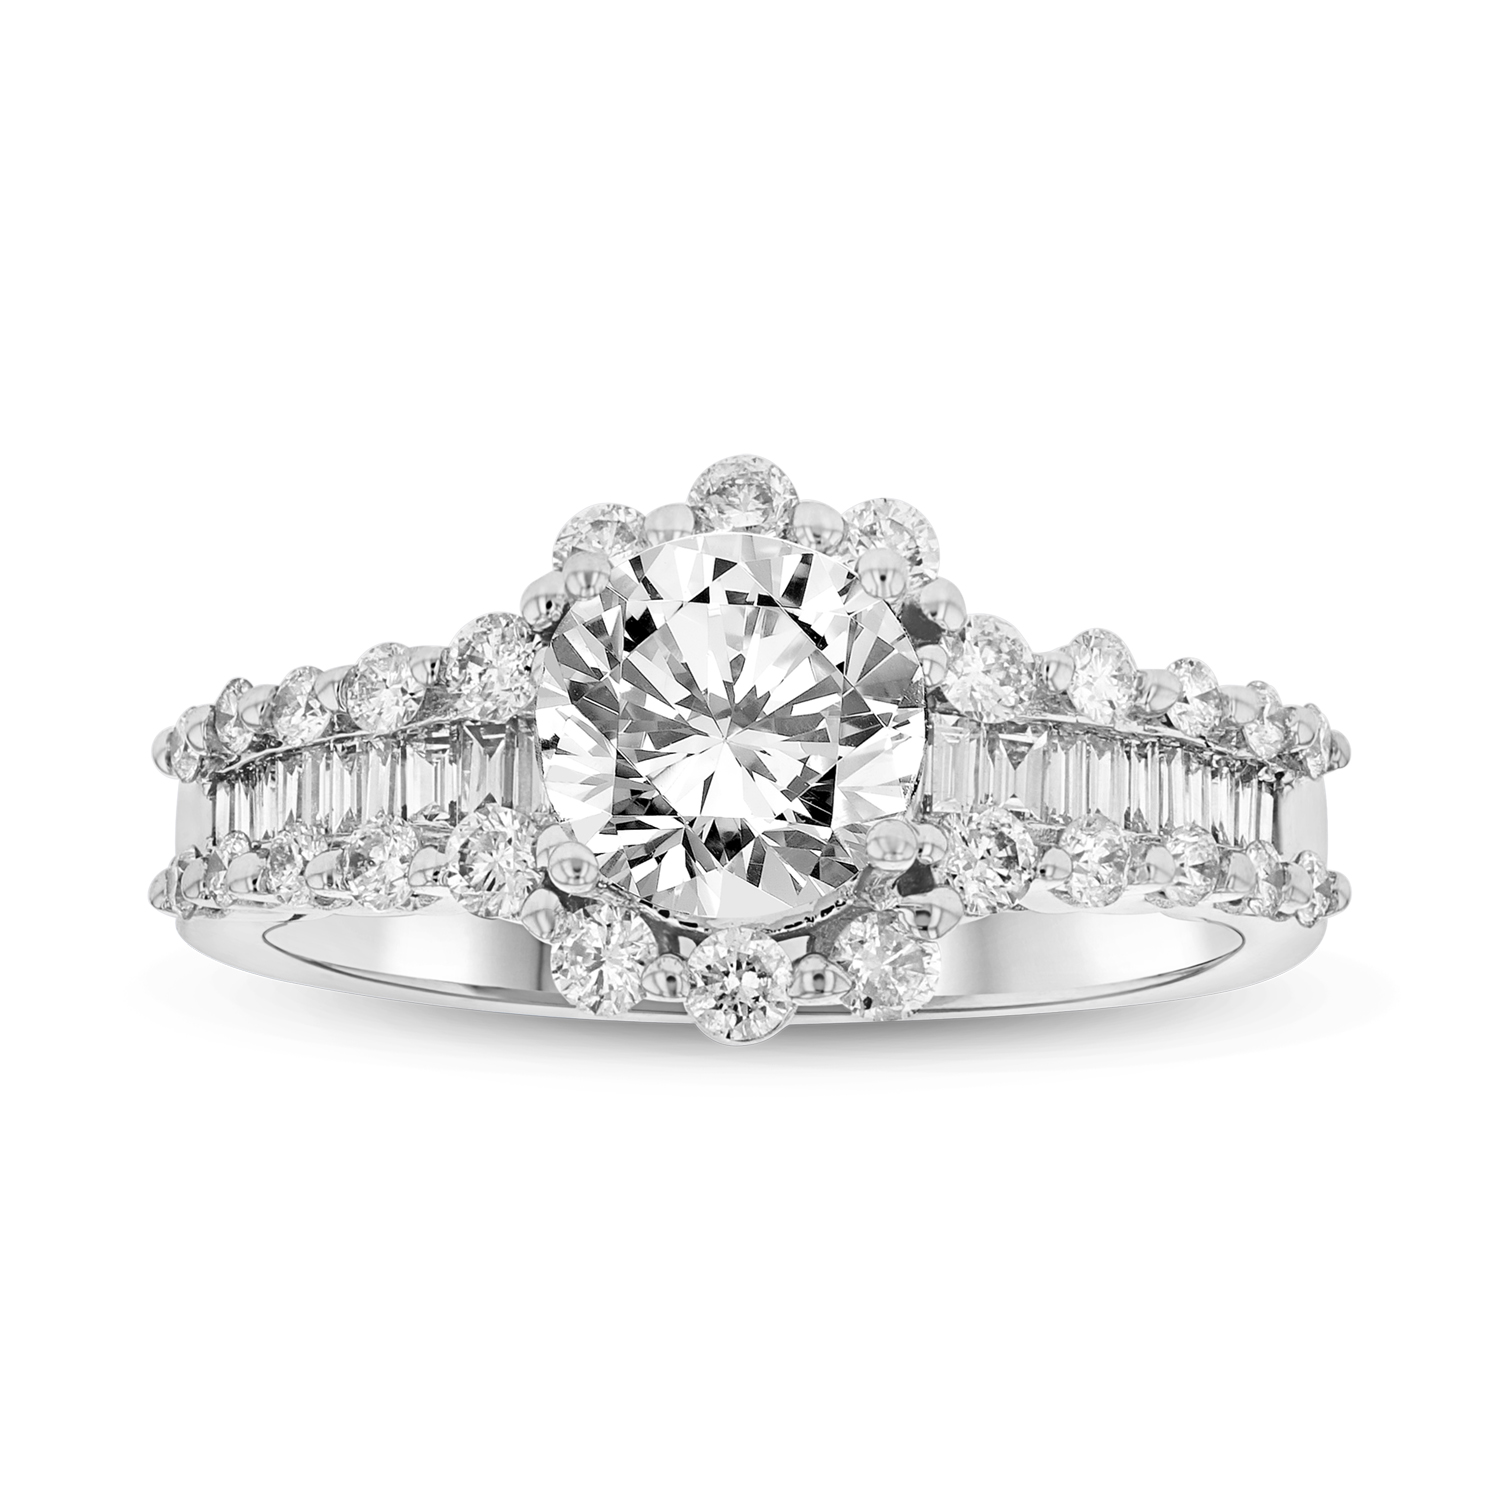 View 0.68ctw Diamond Semi Mount Engagement Ring in 18k WG